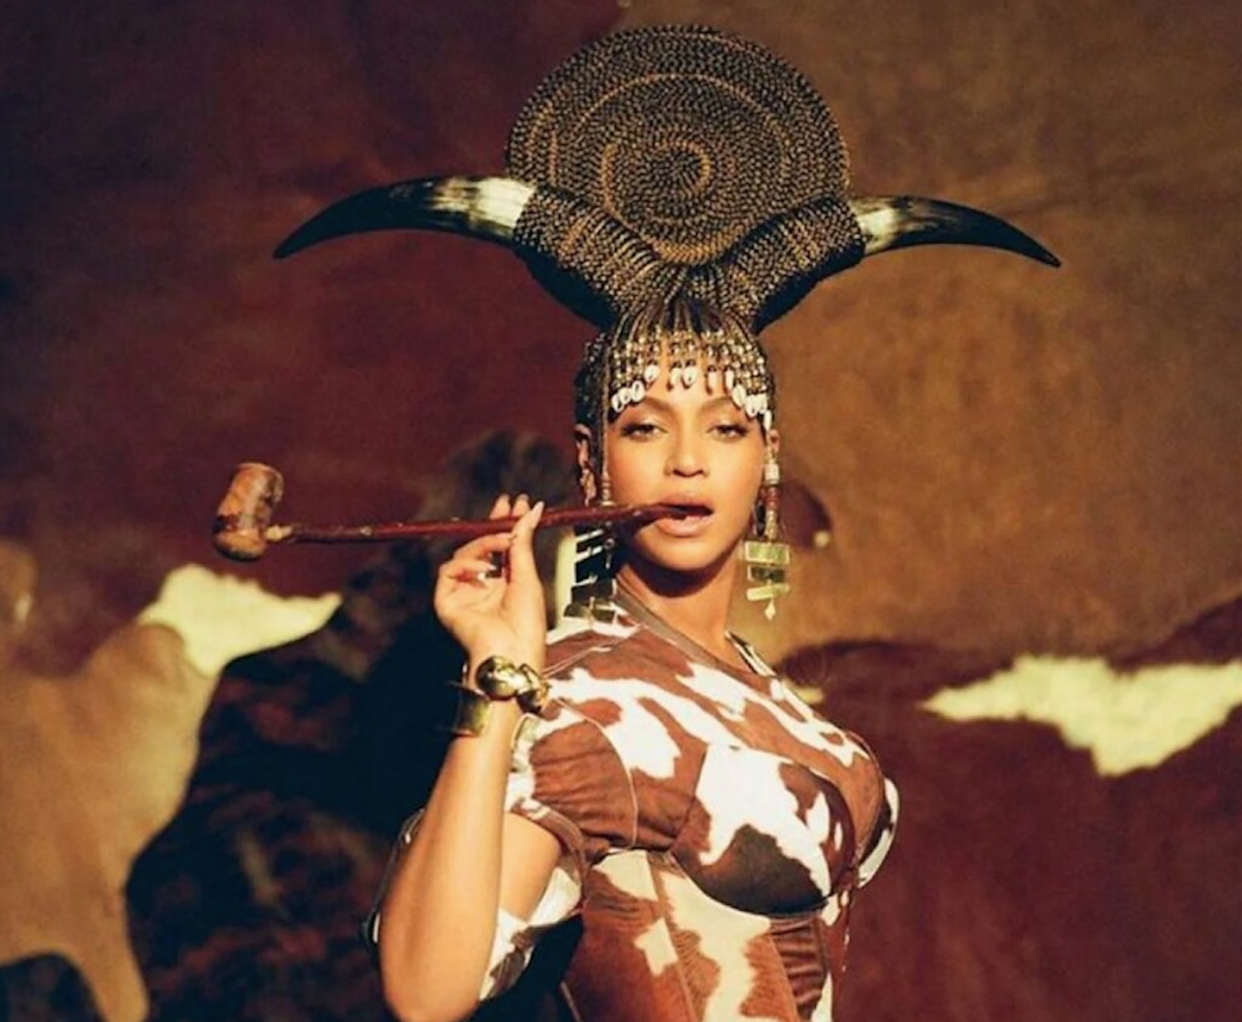 Dans ses plus récents albums, Beyoncé s'engage fortement auprès de la culture africaine, et devient une véritable plateforme pour sa diffusion au grand public. <a href="https://www.flickr.com/photos/clarkarrington/50752651973/in/photolist-2kjQBeF-2jrtcht-2kjQGCm-RjeK6k-2noNHDi-2kjQG8P-2noNwu7-2faLLbi-2kjGLvL-2kjCYiZ-2noPMKP-2kZ2fQY-2kjGHh6-2kjGGwo-2jtbKQw-2jskjUU-2noR9t1-2noHgMx-2kjUqD2-ADyyb2-2noNwk9-2noNHAH-2noNHA2-2gCwEyz-2jvmKnf-2noNHzq-dQbf8j-2noPMPr-T6ukpA-2jsgfah-2noNHCb-2noPMNQ-2noPMQP-2jx4mQa-2jurtGP-2noNwAE-2jskkEB-2jsj1MT-2jsgfjf-2jskm3R-2js4q4U-2jskkWU-2jsj2Dx-2jsj2F1-2jsj275-2noNwq4-2jGTKAo-2noNHCB-2noNHxM-2jsj2g3/" rel="nofollow noopener" target="_blank" data-ylk="slk:Flickr;elm:context_link;itc:0;sec:content-canvas" class="link ">Flickr</a>